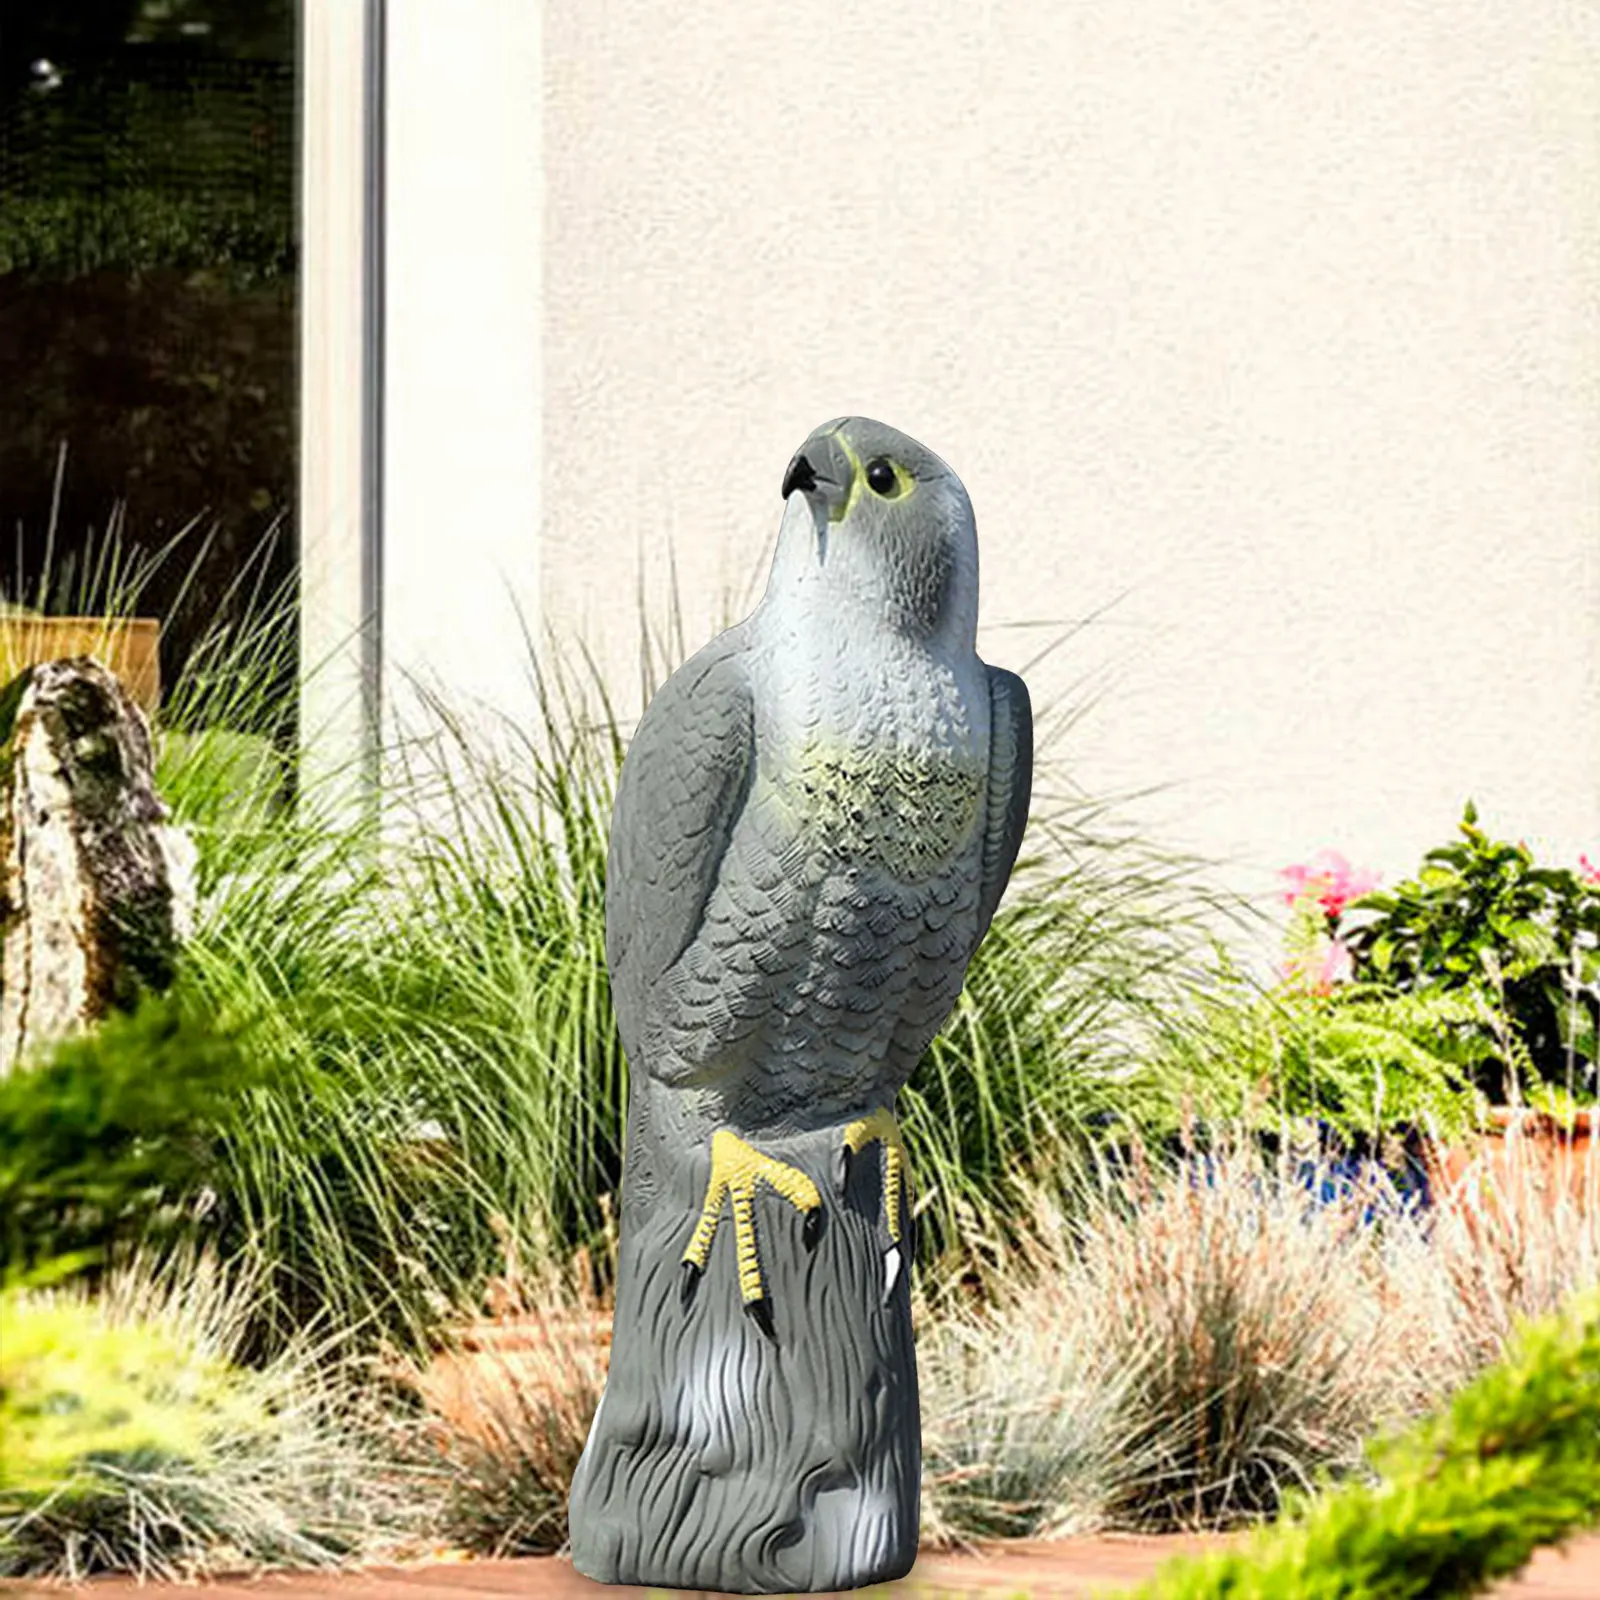 

Simulation Eagle Statue Living Room Ornaments Home Decor Artificial Crafts Garden Sculpture Patio Porch Yard Decoration